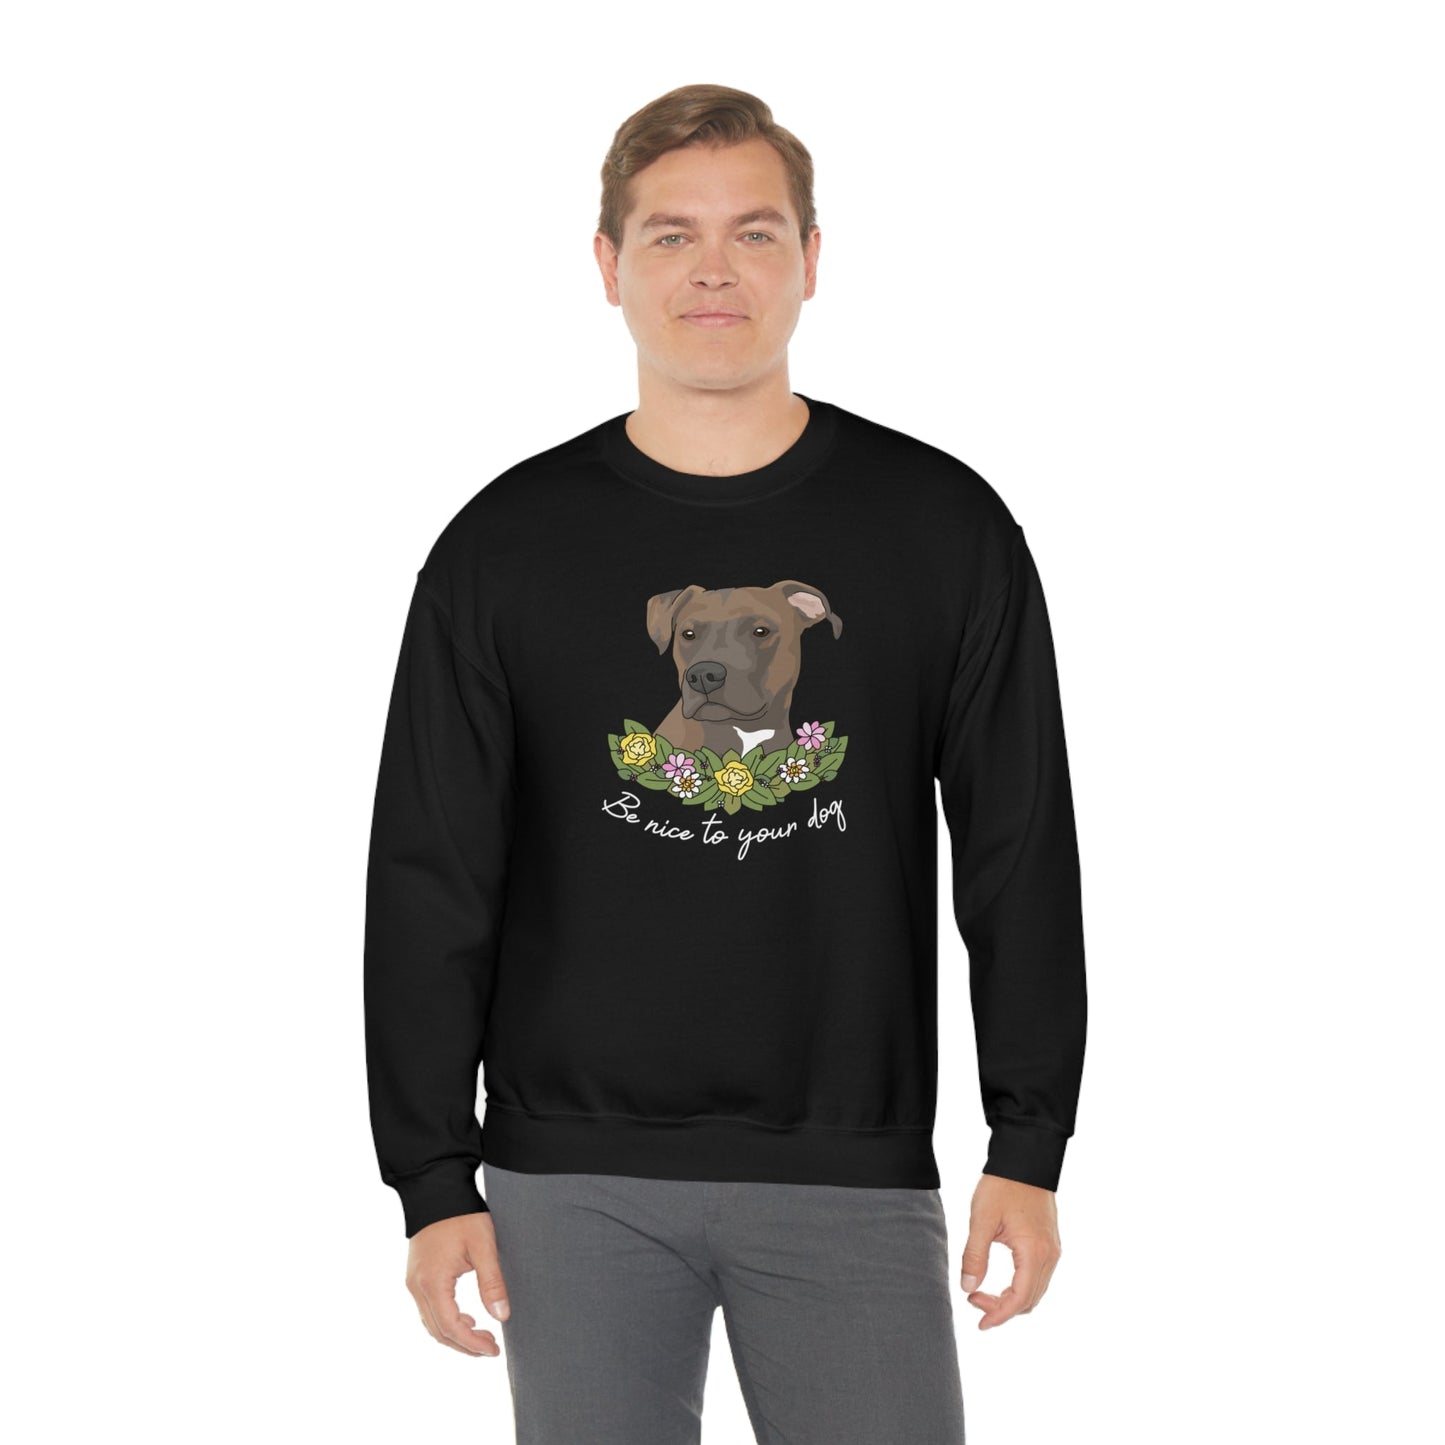 Be Nice to Your Dog | Crewneck Sweatshirt - Detezi Designs-31714773877015966740